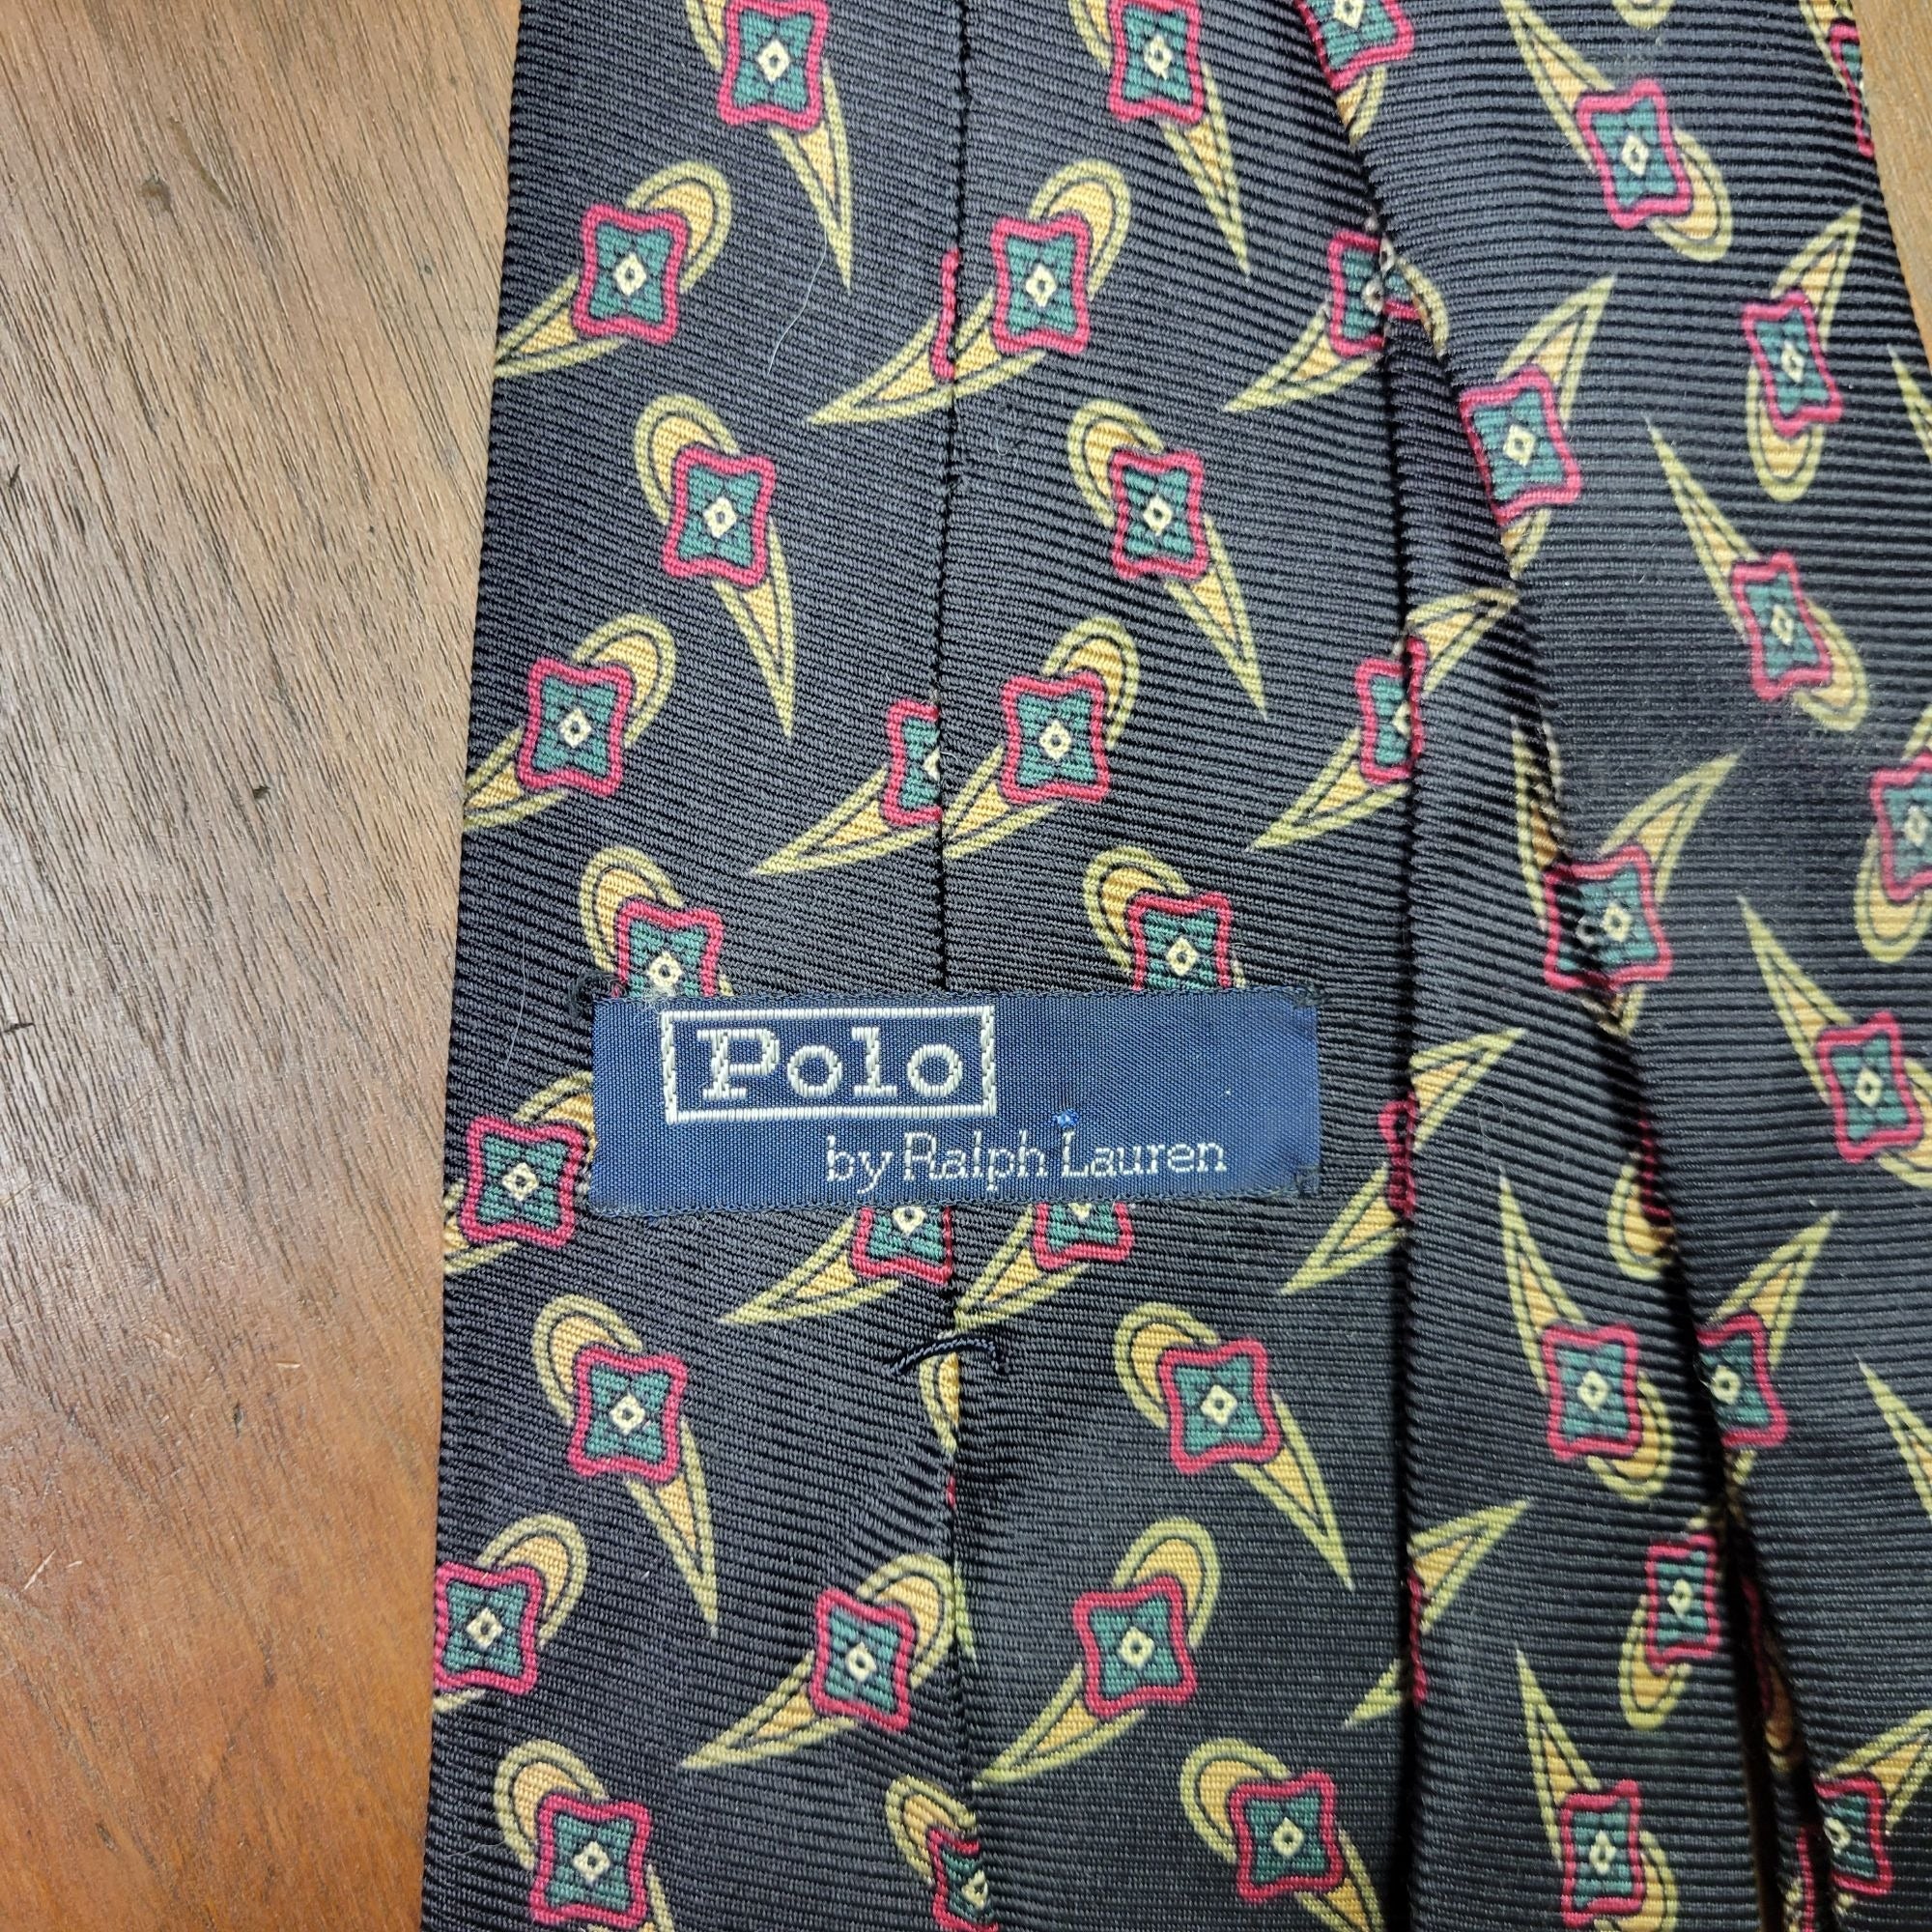 Polo by Ralph Lauren Black Men's Tie, 60, in Long